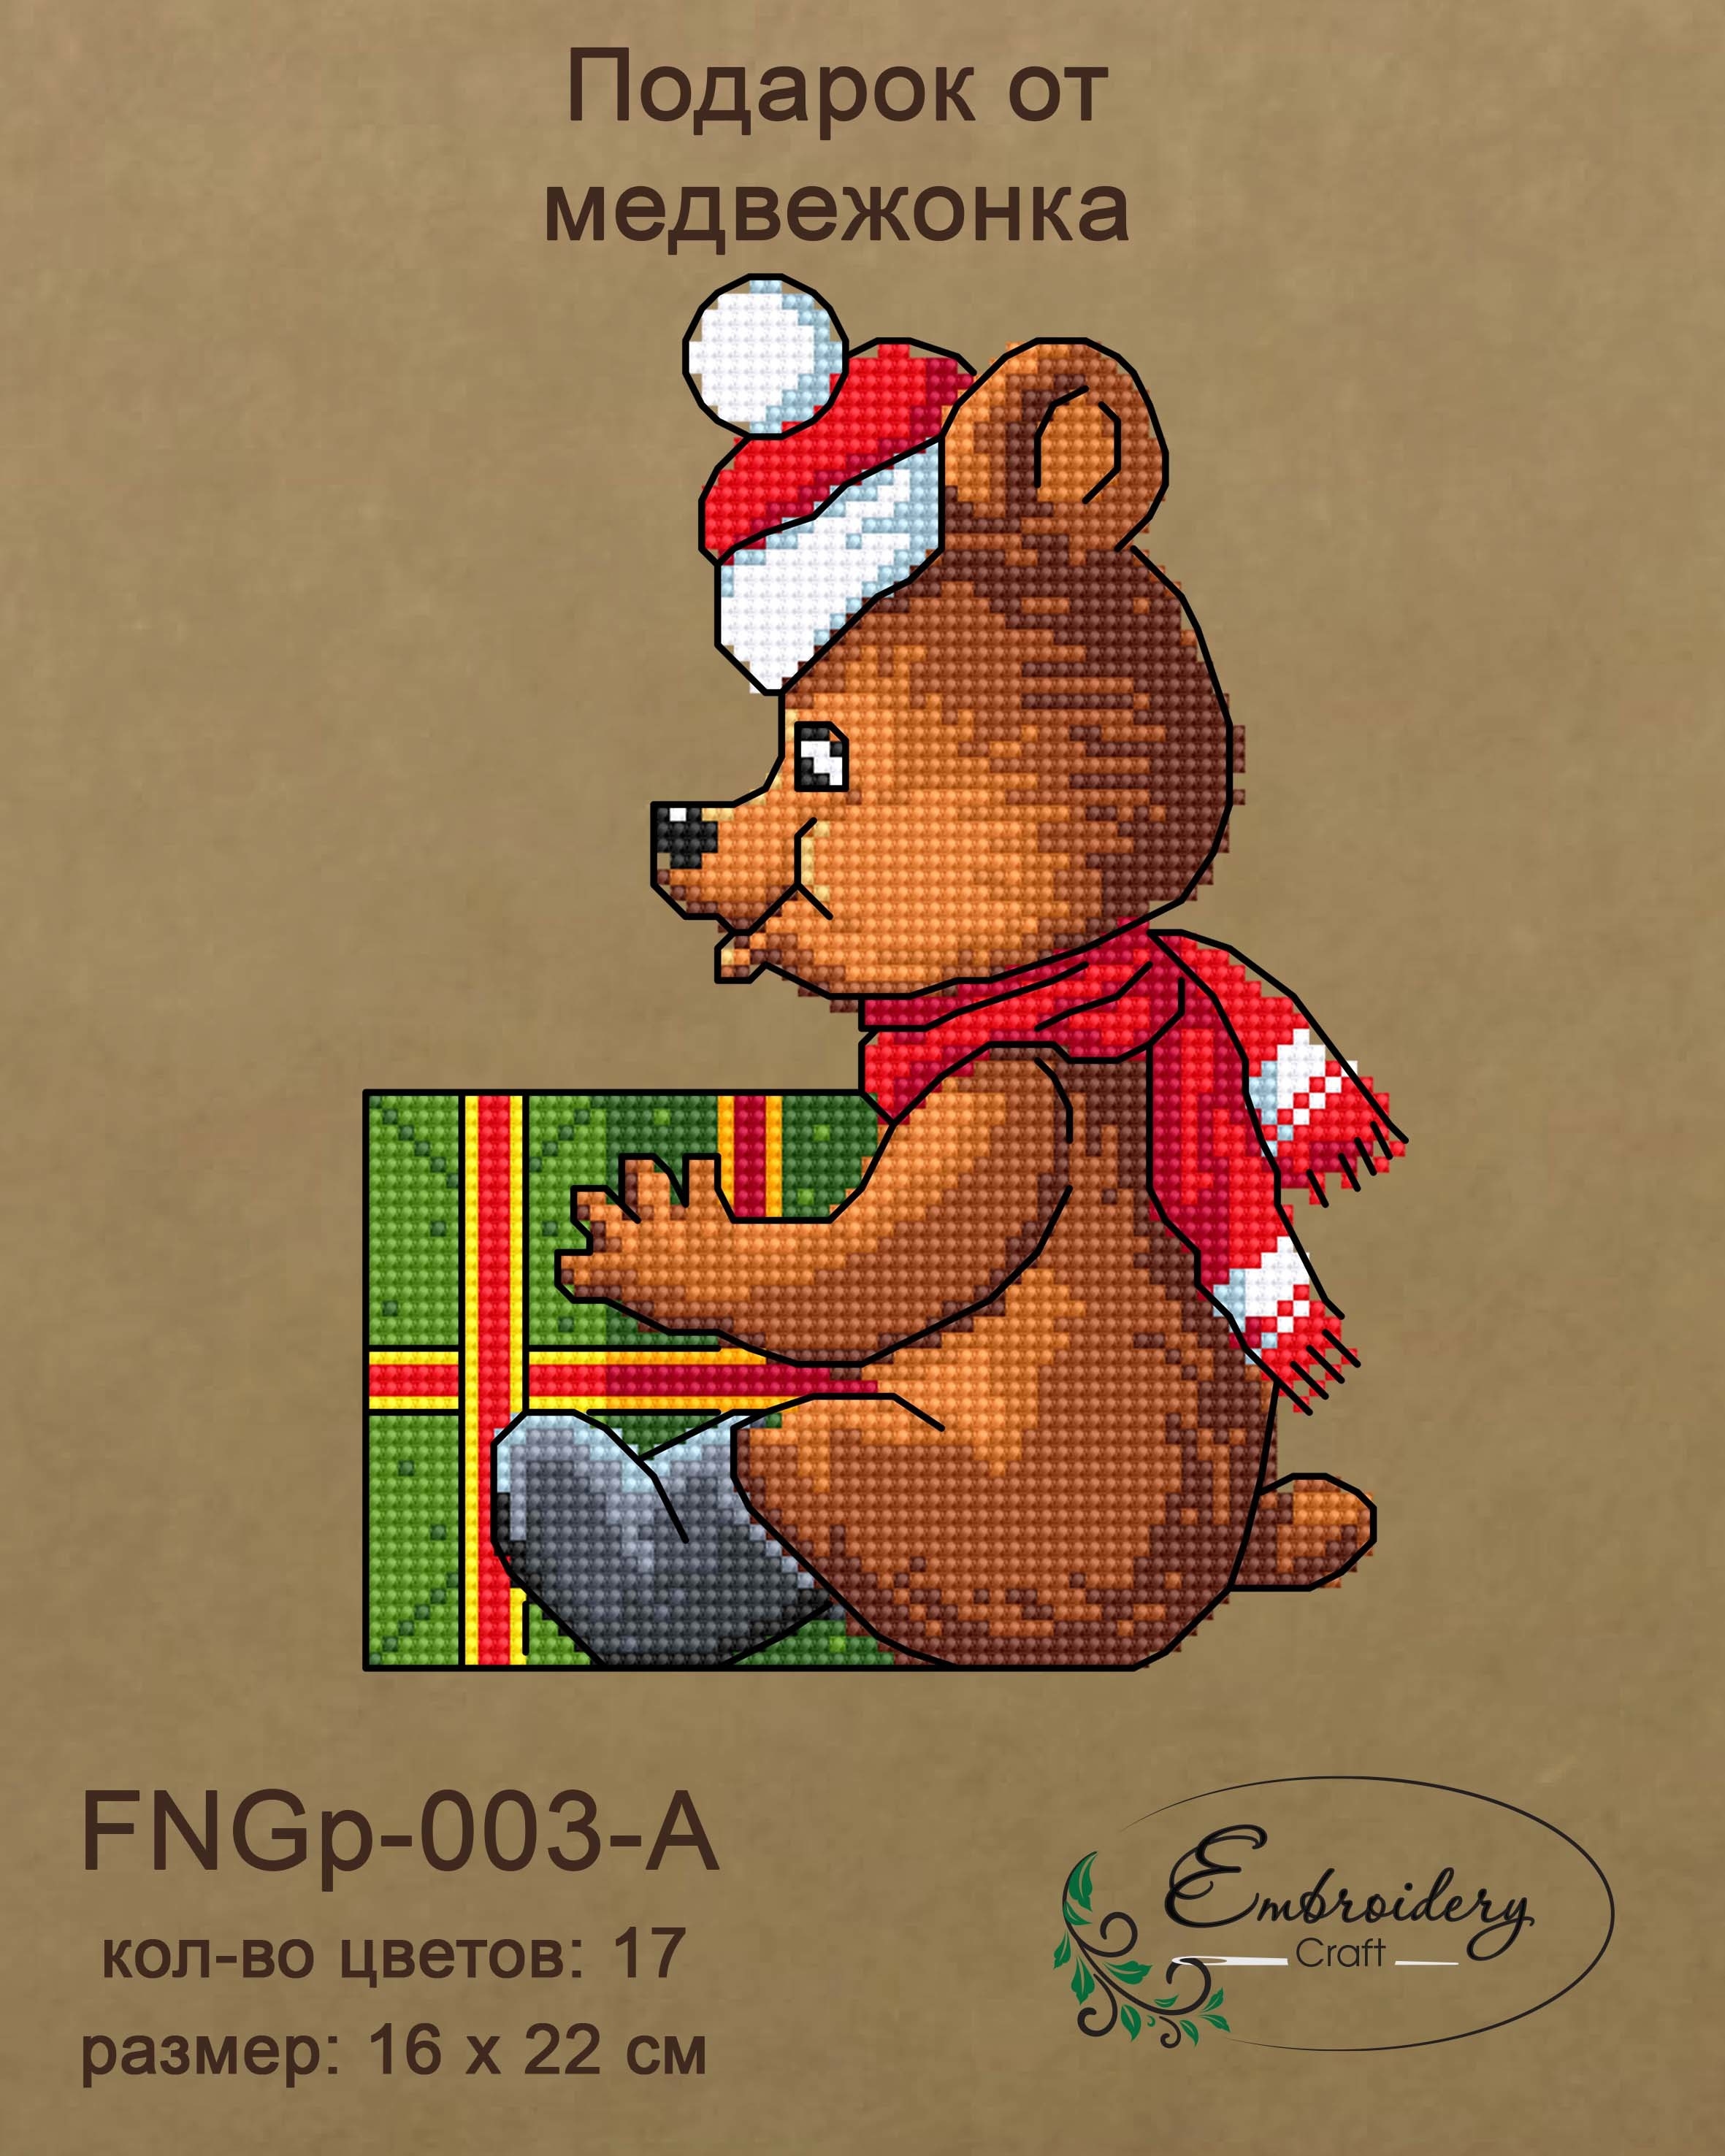 FNNGp-003-A Подарок от медвежонка